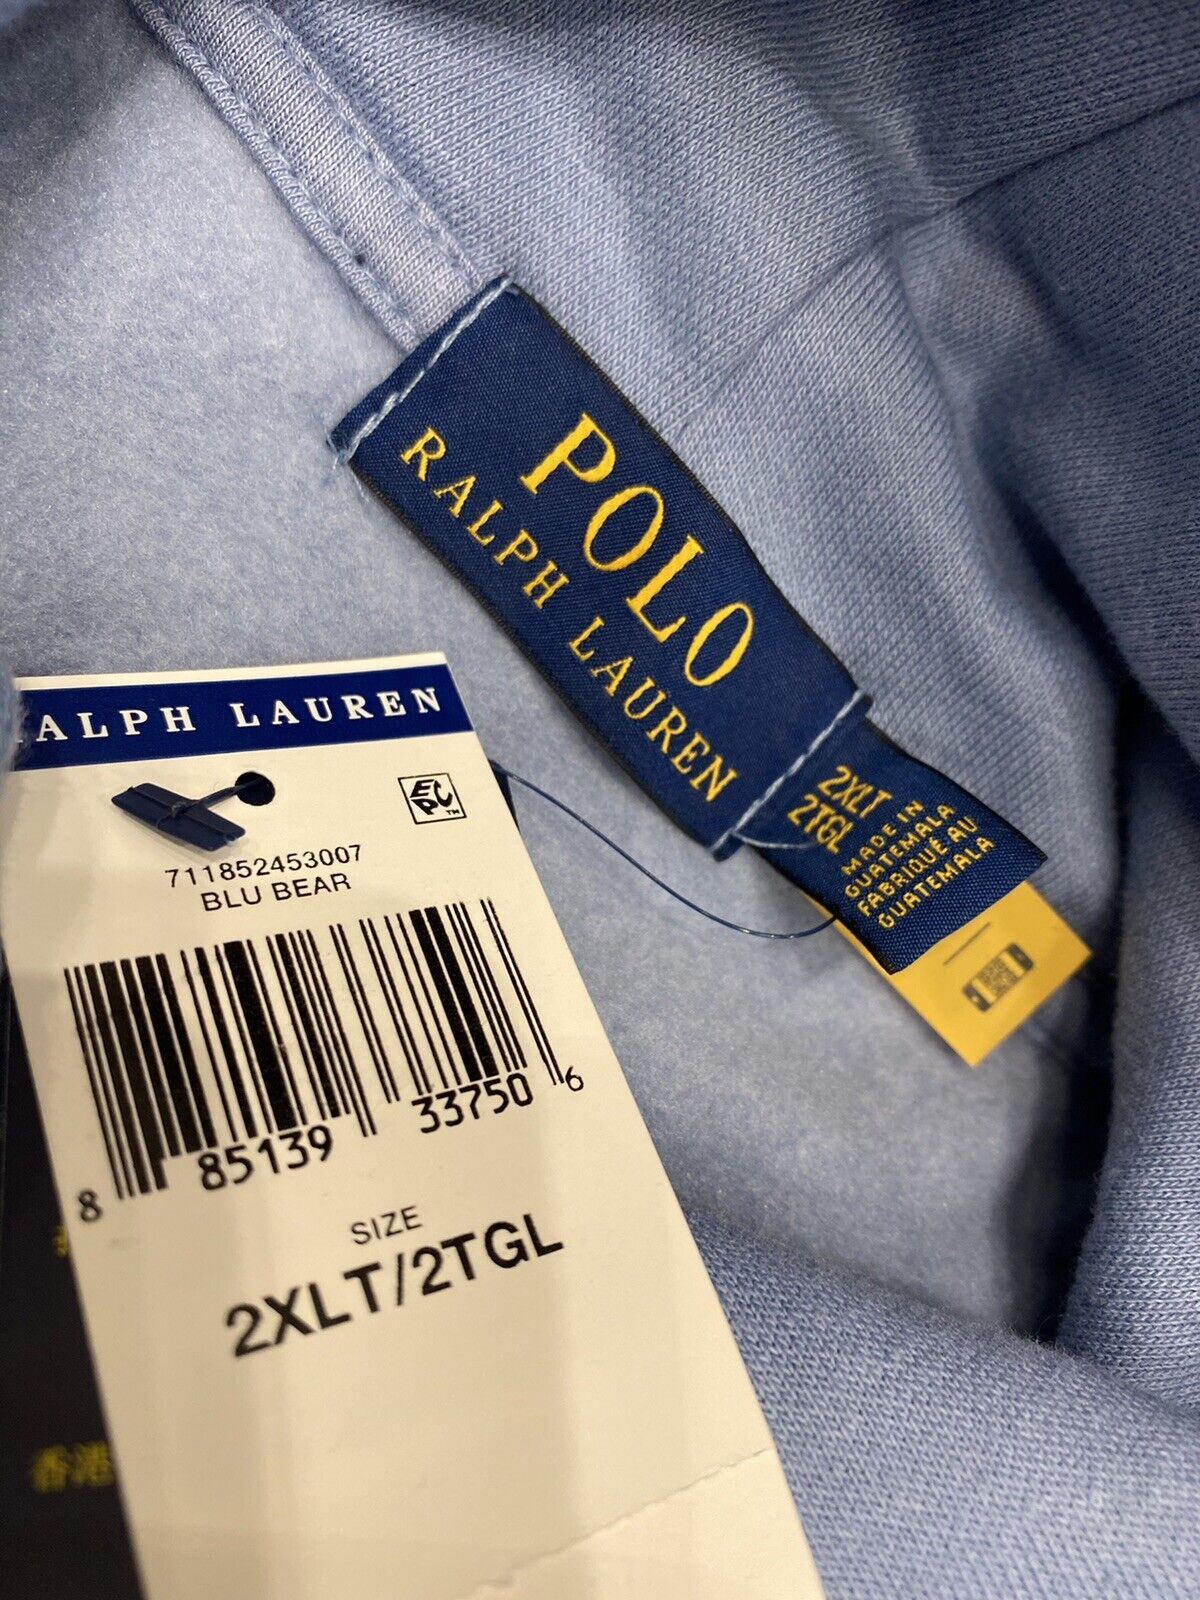 Neu für 188 $ Polo Ralph Lauren Langarm-Bärenpullover mit Kapuze Blau 2XLT/2TGL 